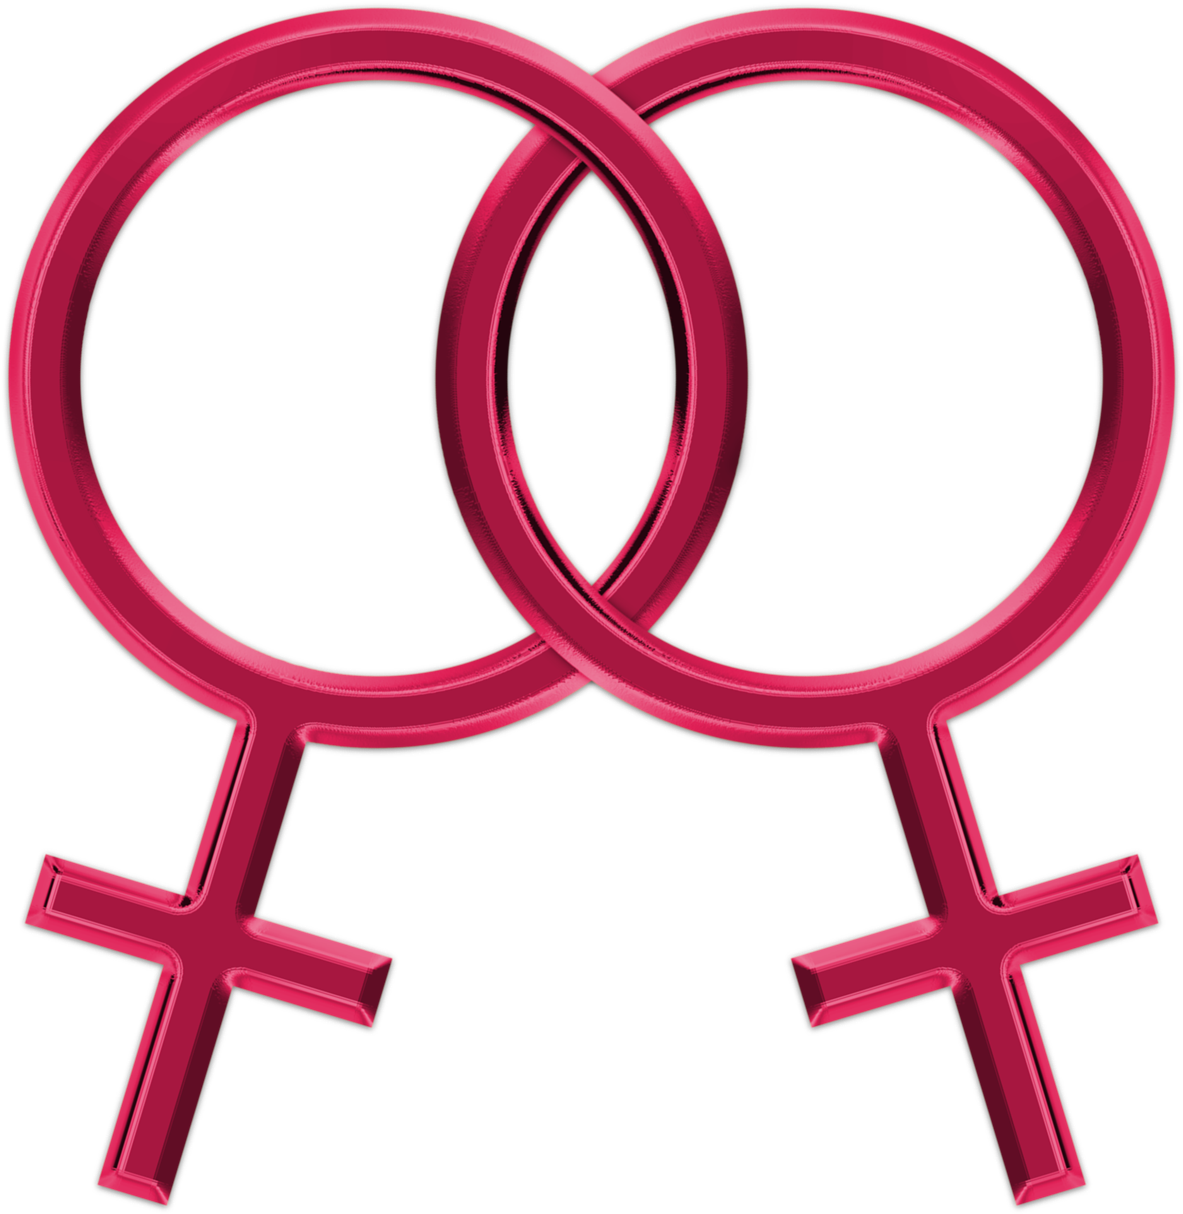 Lesbian Symbol Interlocking Female Signs